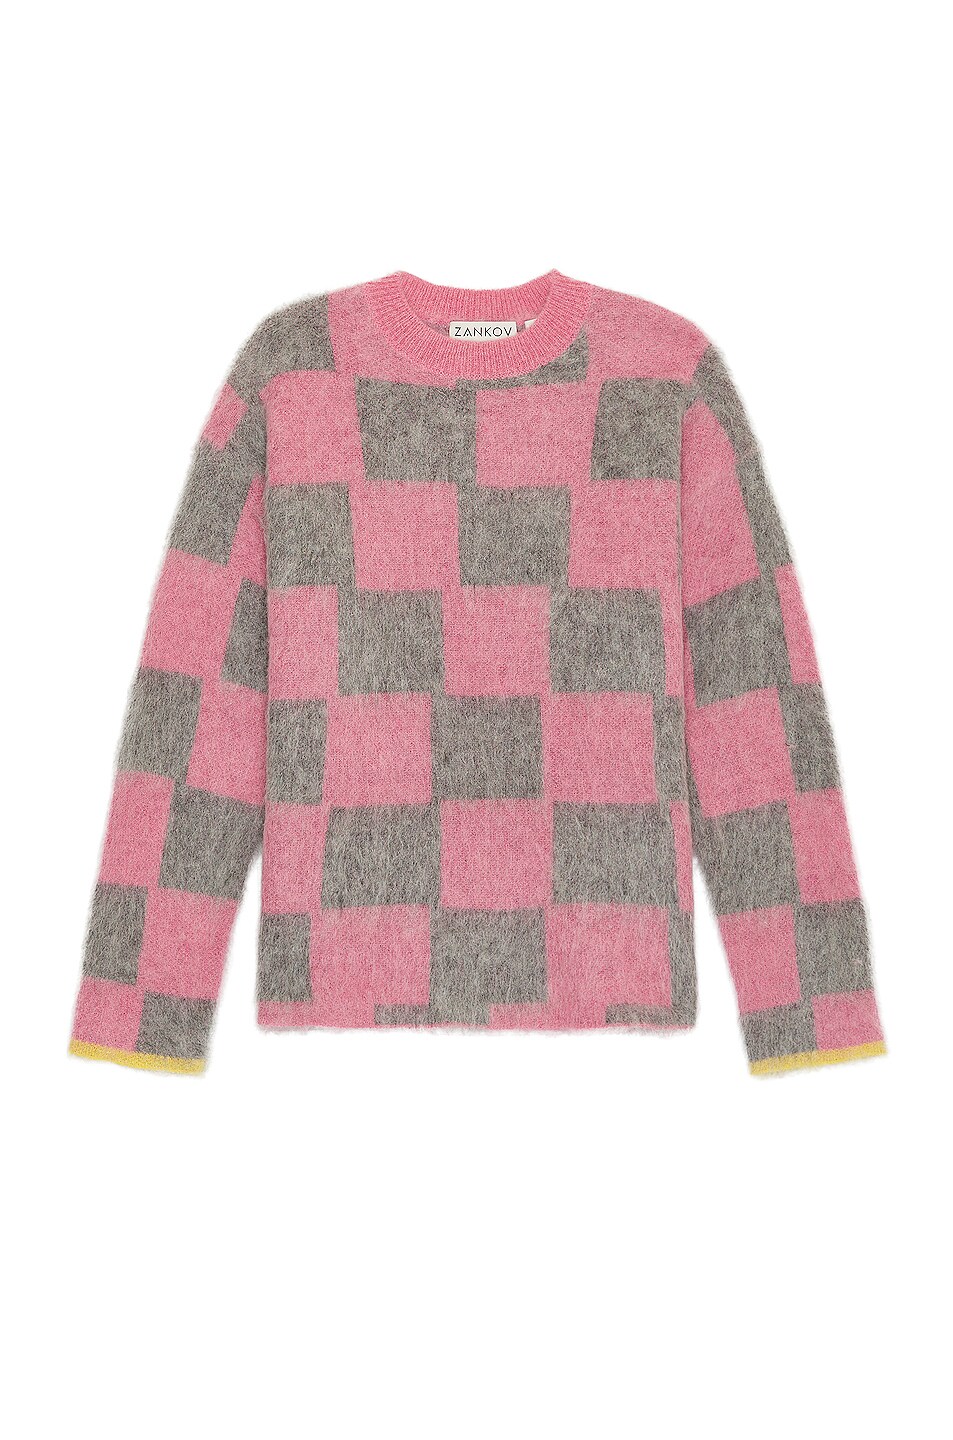 Image 1 of Zankov Rudy Sweater in Pink & Grey